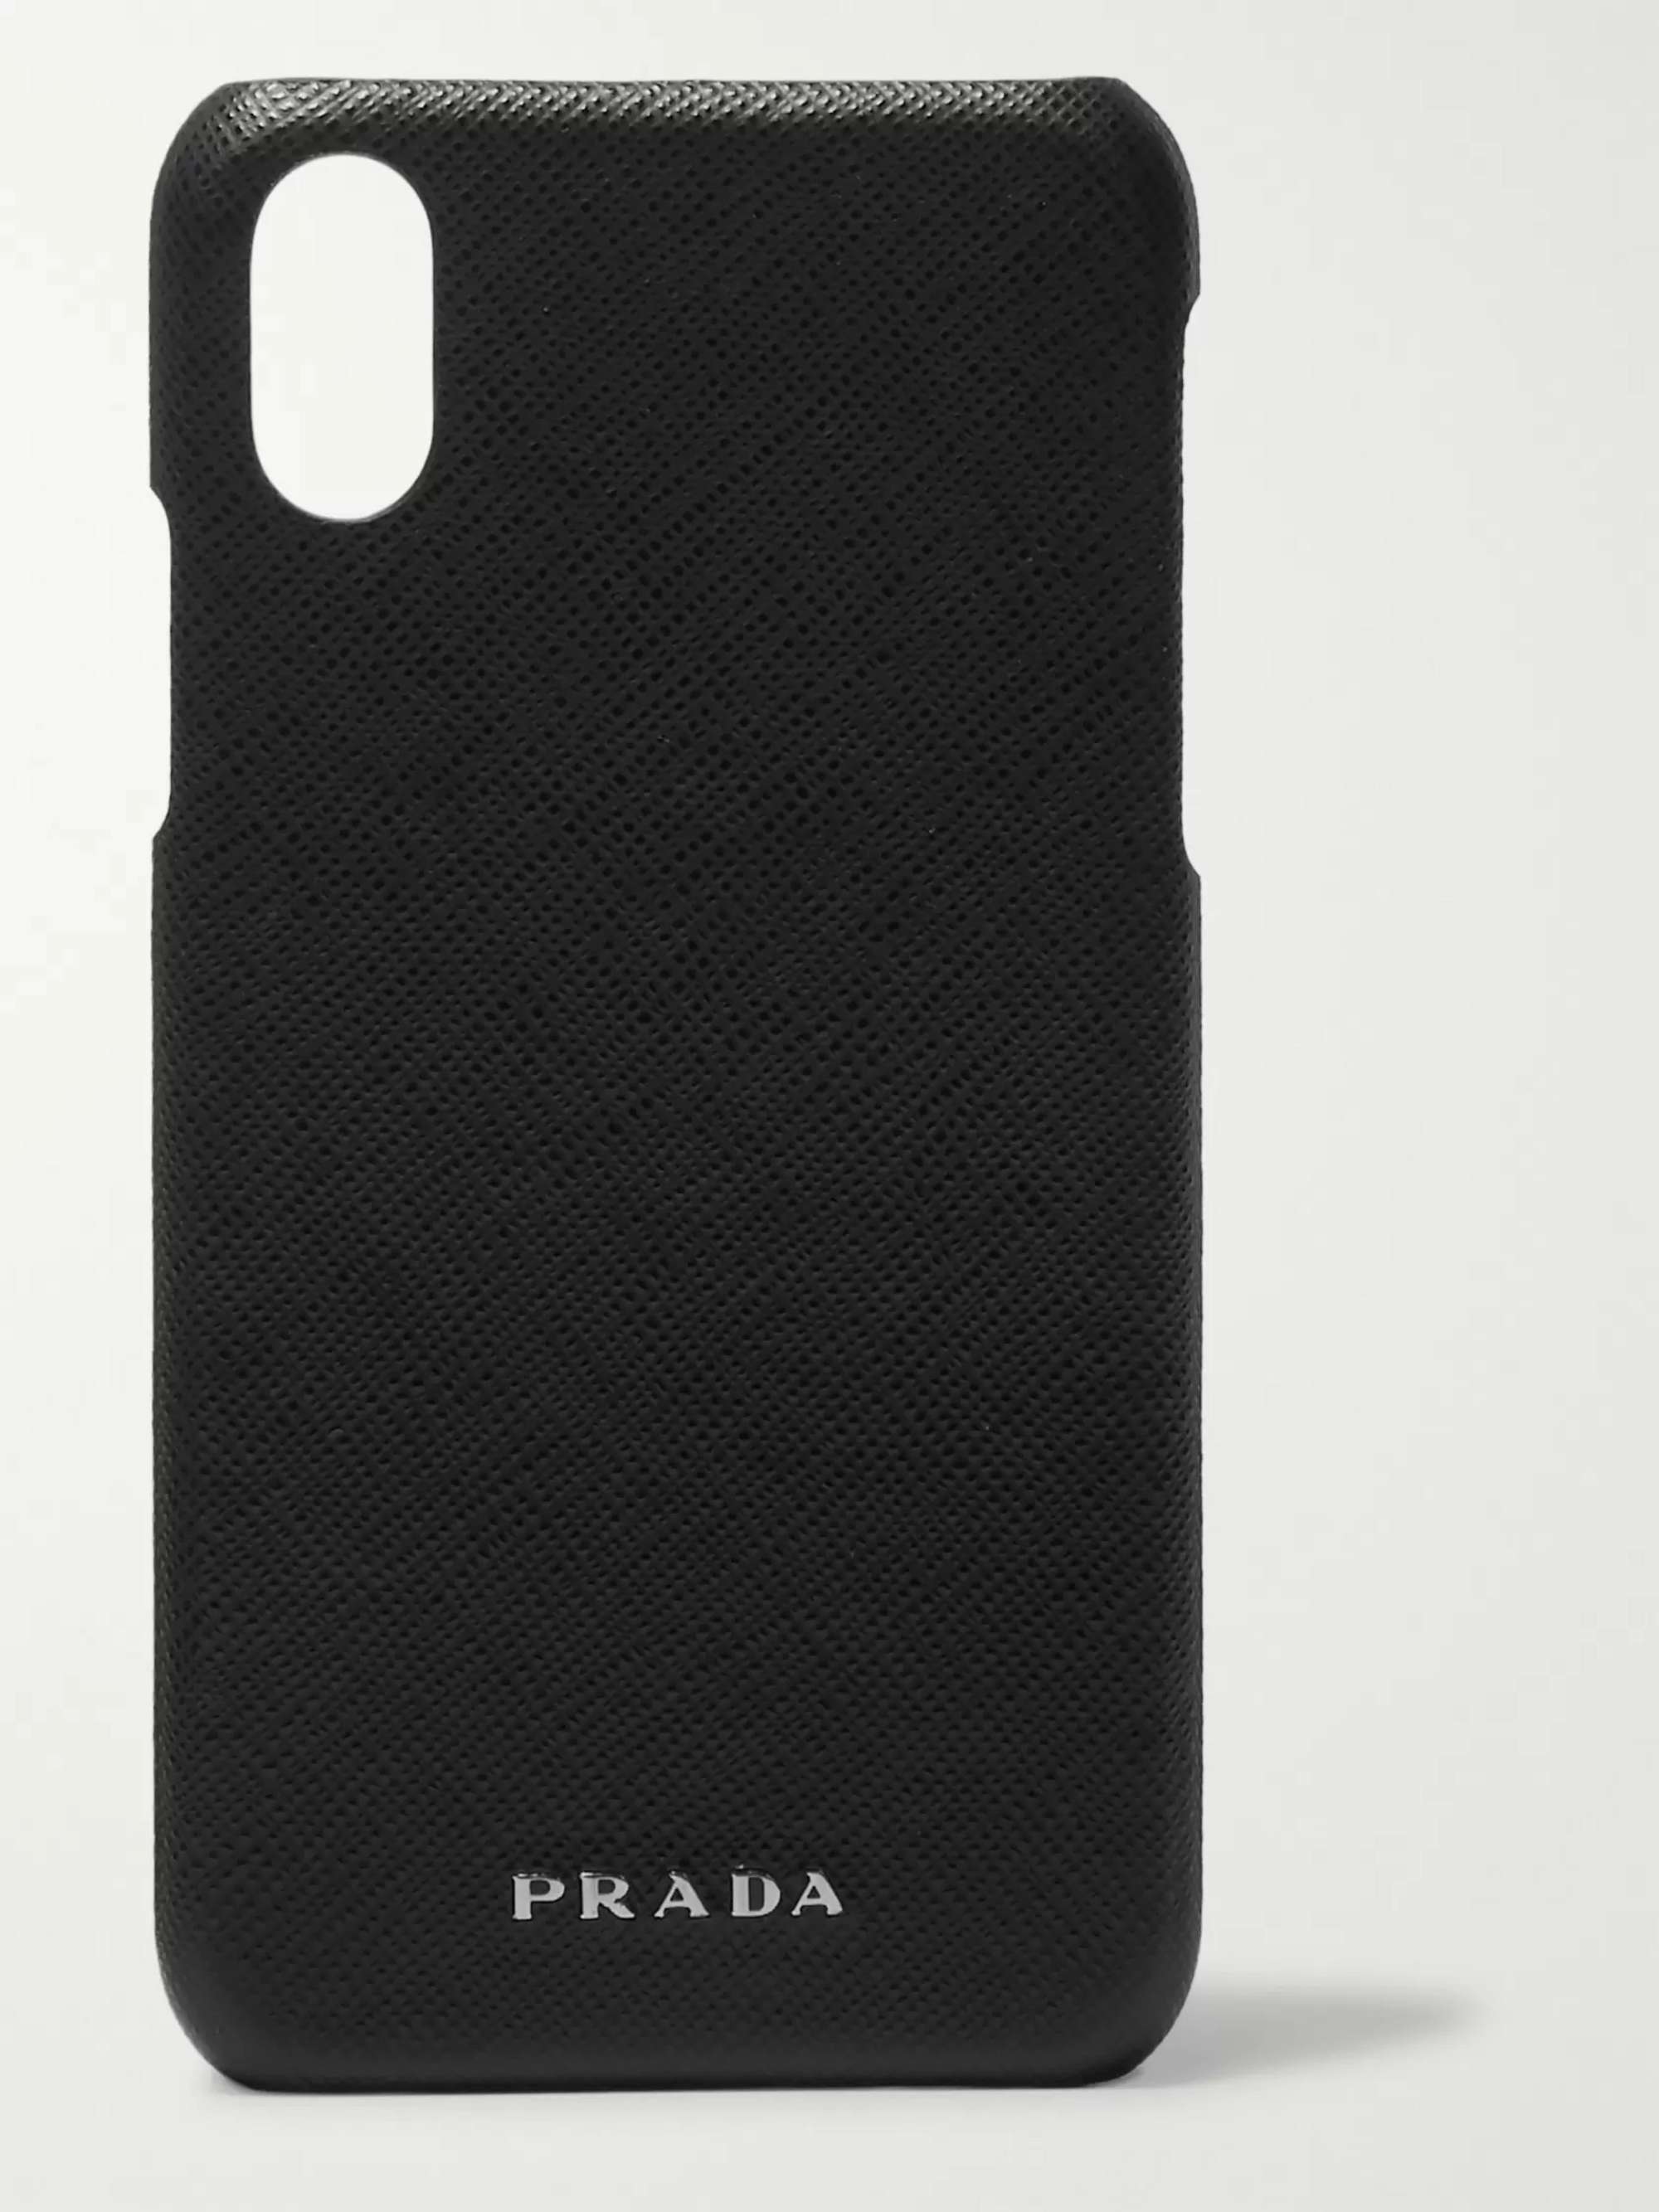 PRADA Saffiano Leather iPhone XS Case